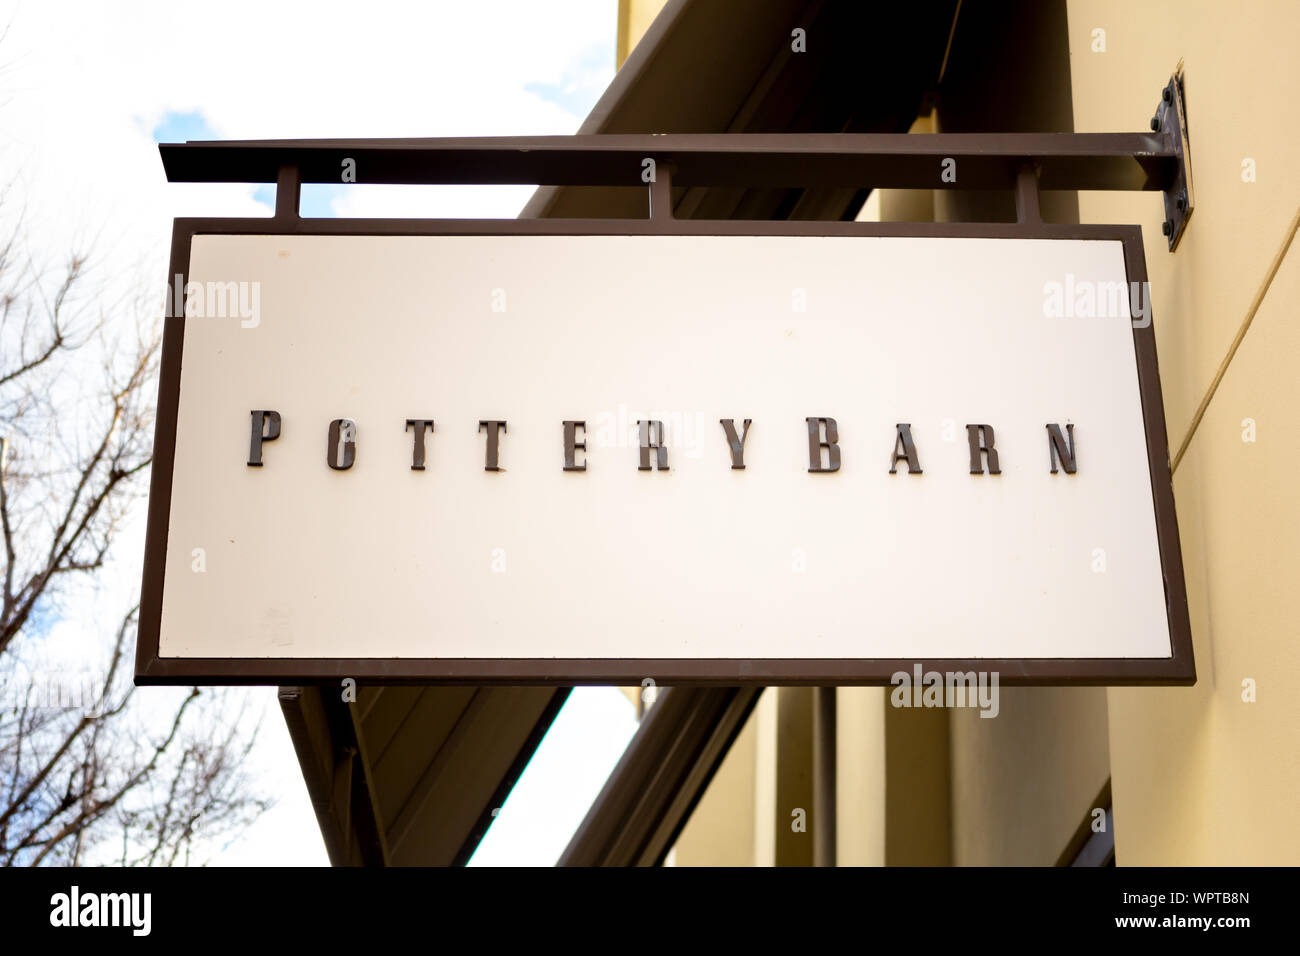 Pottery Barn Flatiron NYC